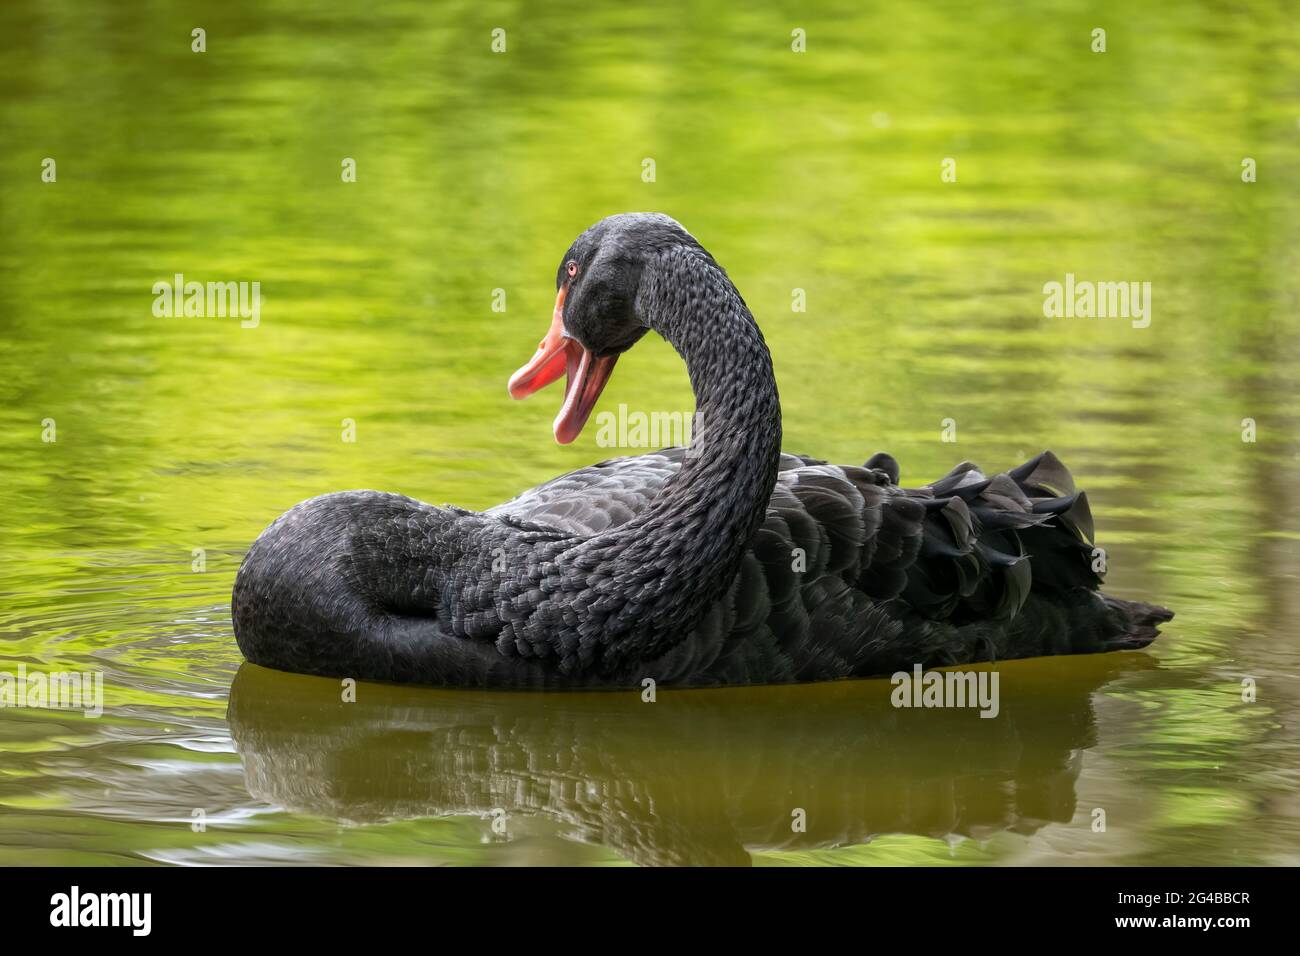 Black swan (Cygnus atratus) with open beak in the lake, family: Anatidae, native region: Australia Stock Photo